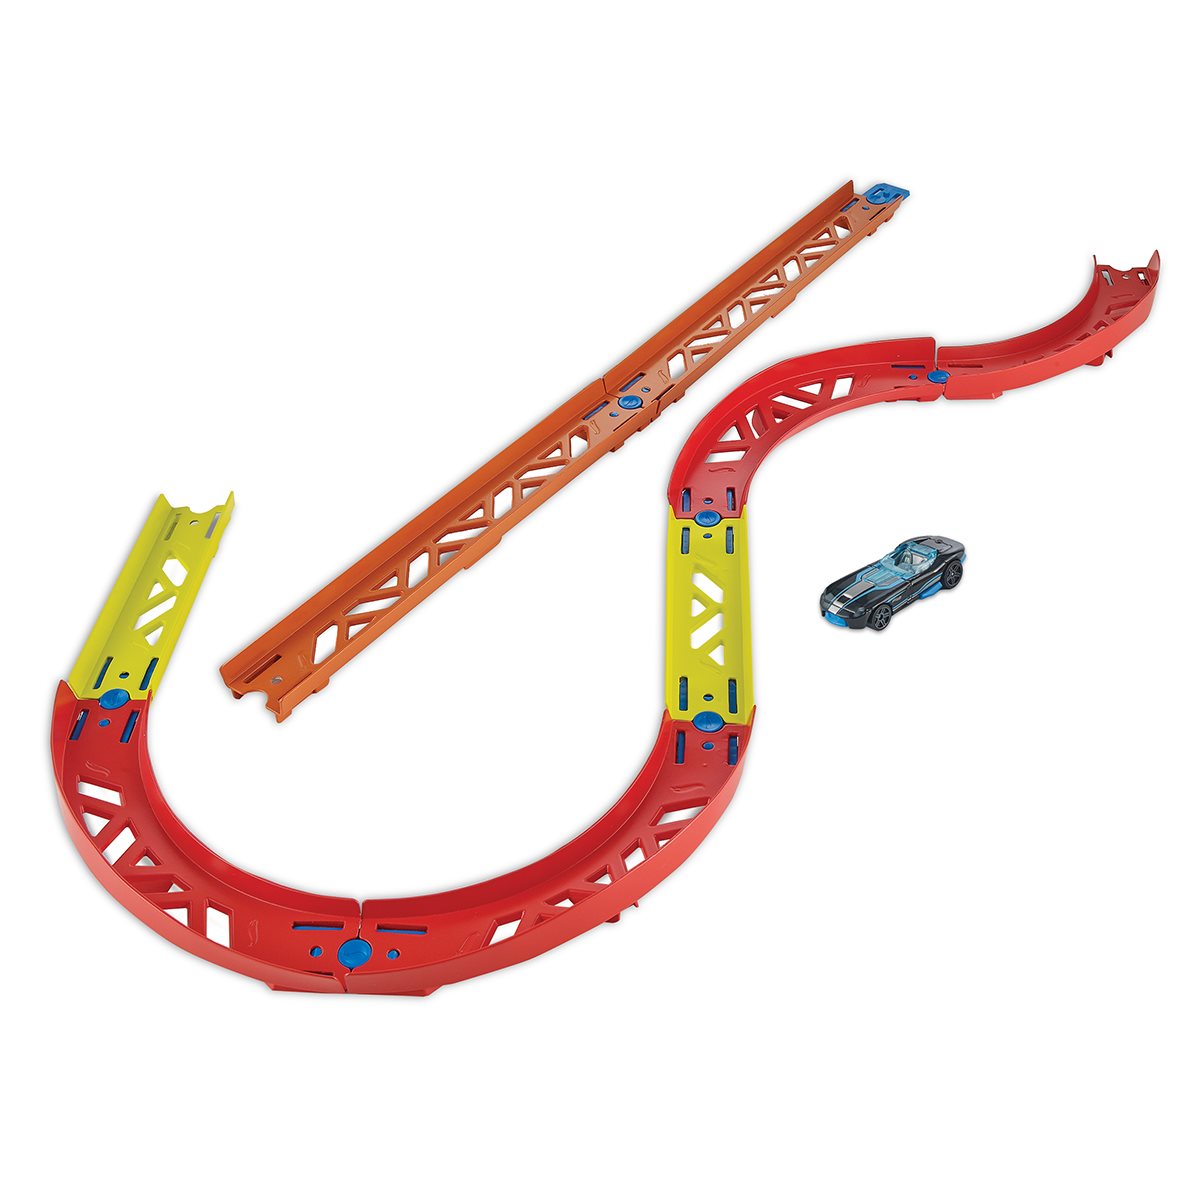 Hot Wheels Premium Clamshell & Track Pack – Mattel Creations